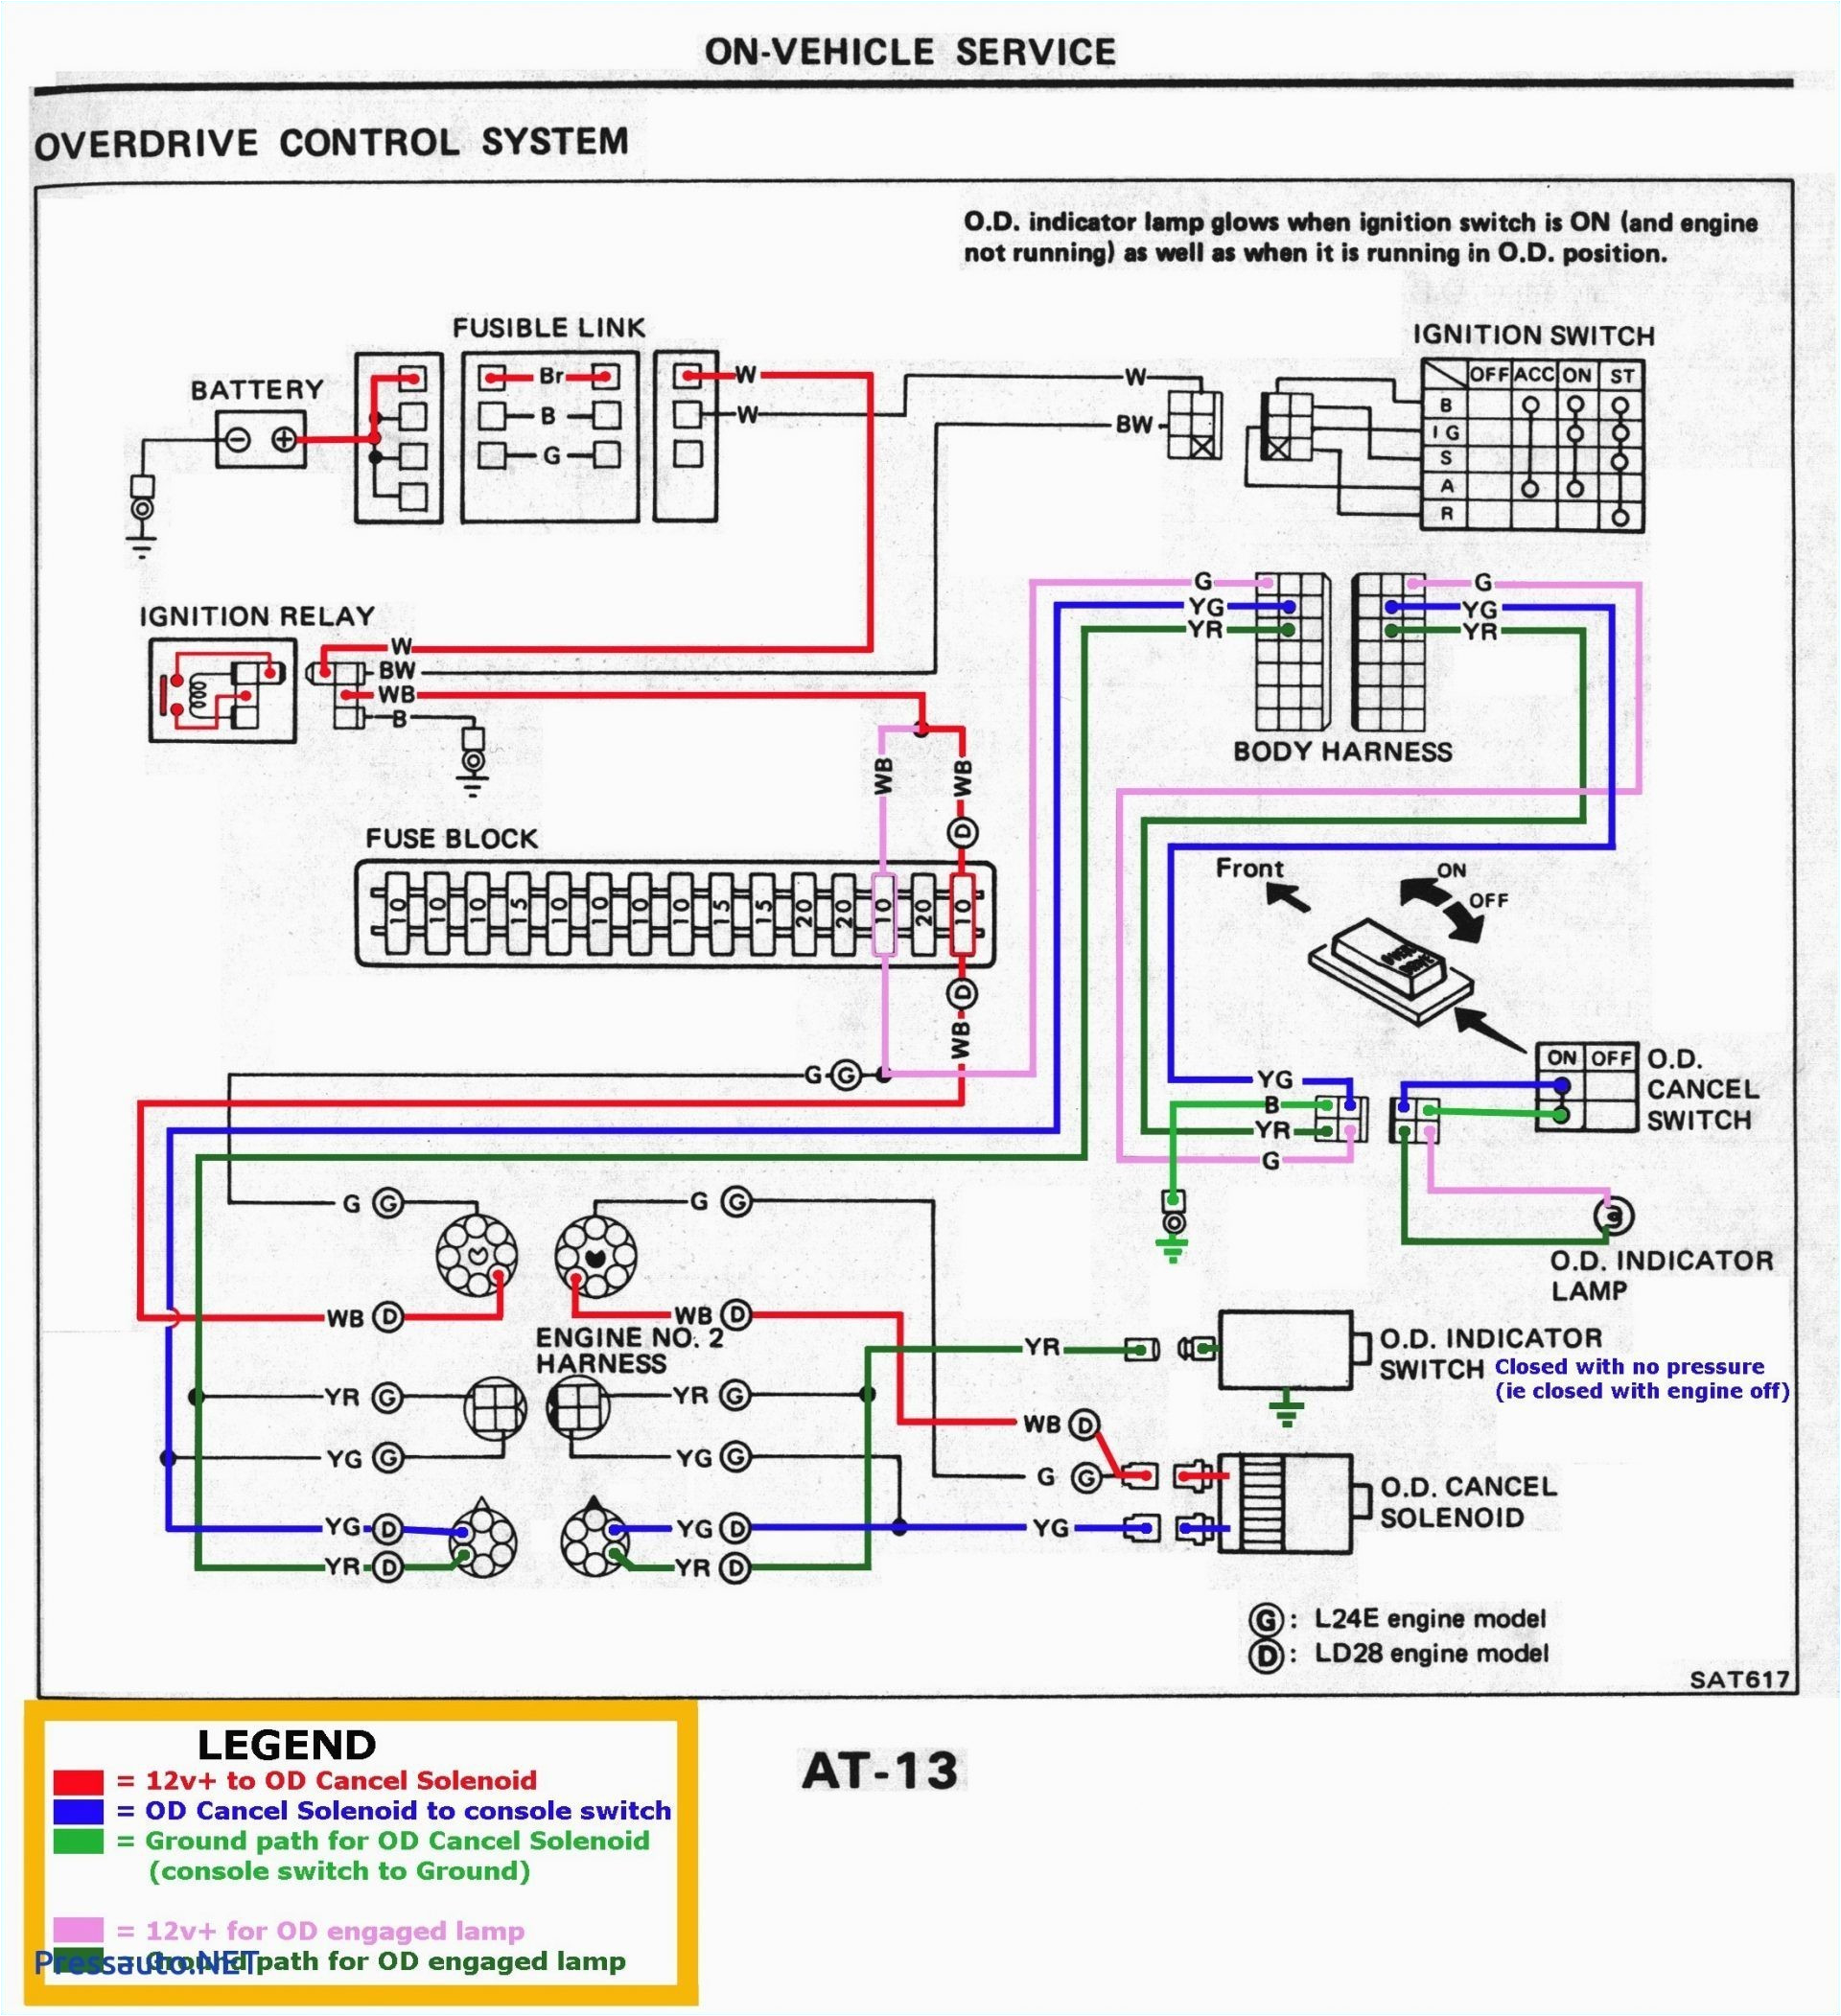 95 ford F150 Wiring Diagram 1996 Neon Wiring Harness Diagram Book Diagram Schema